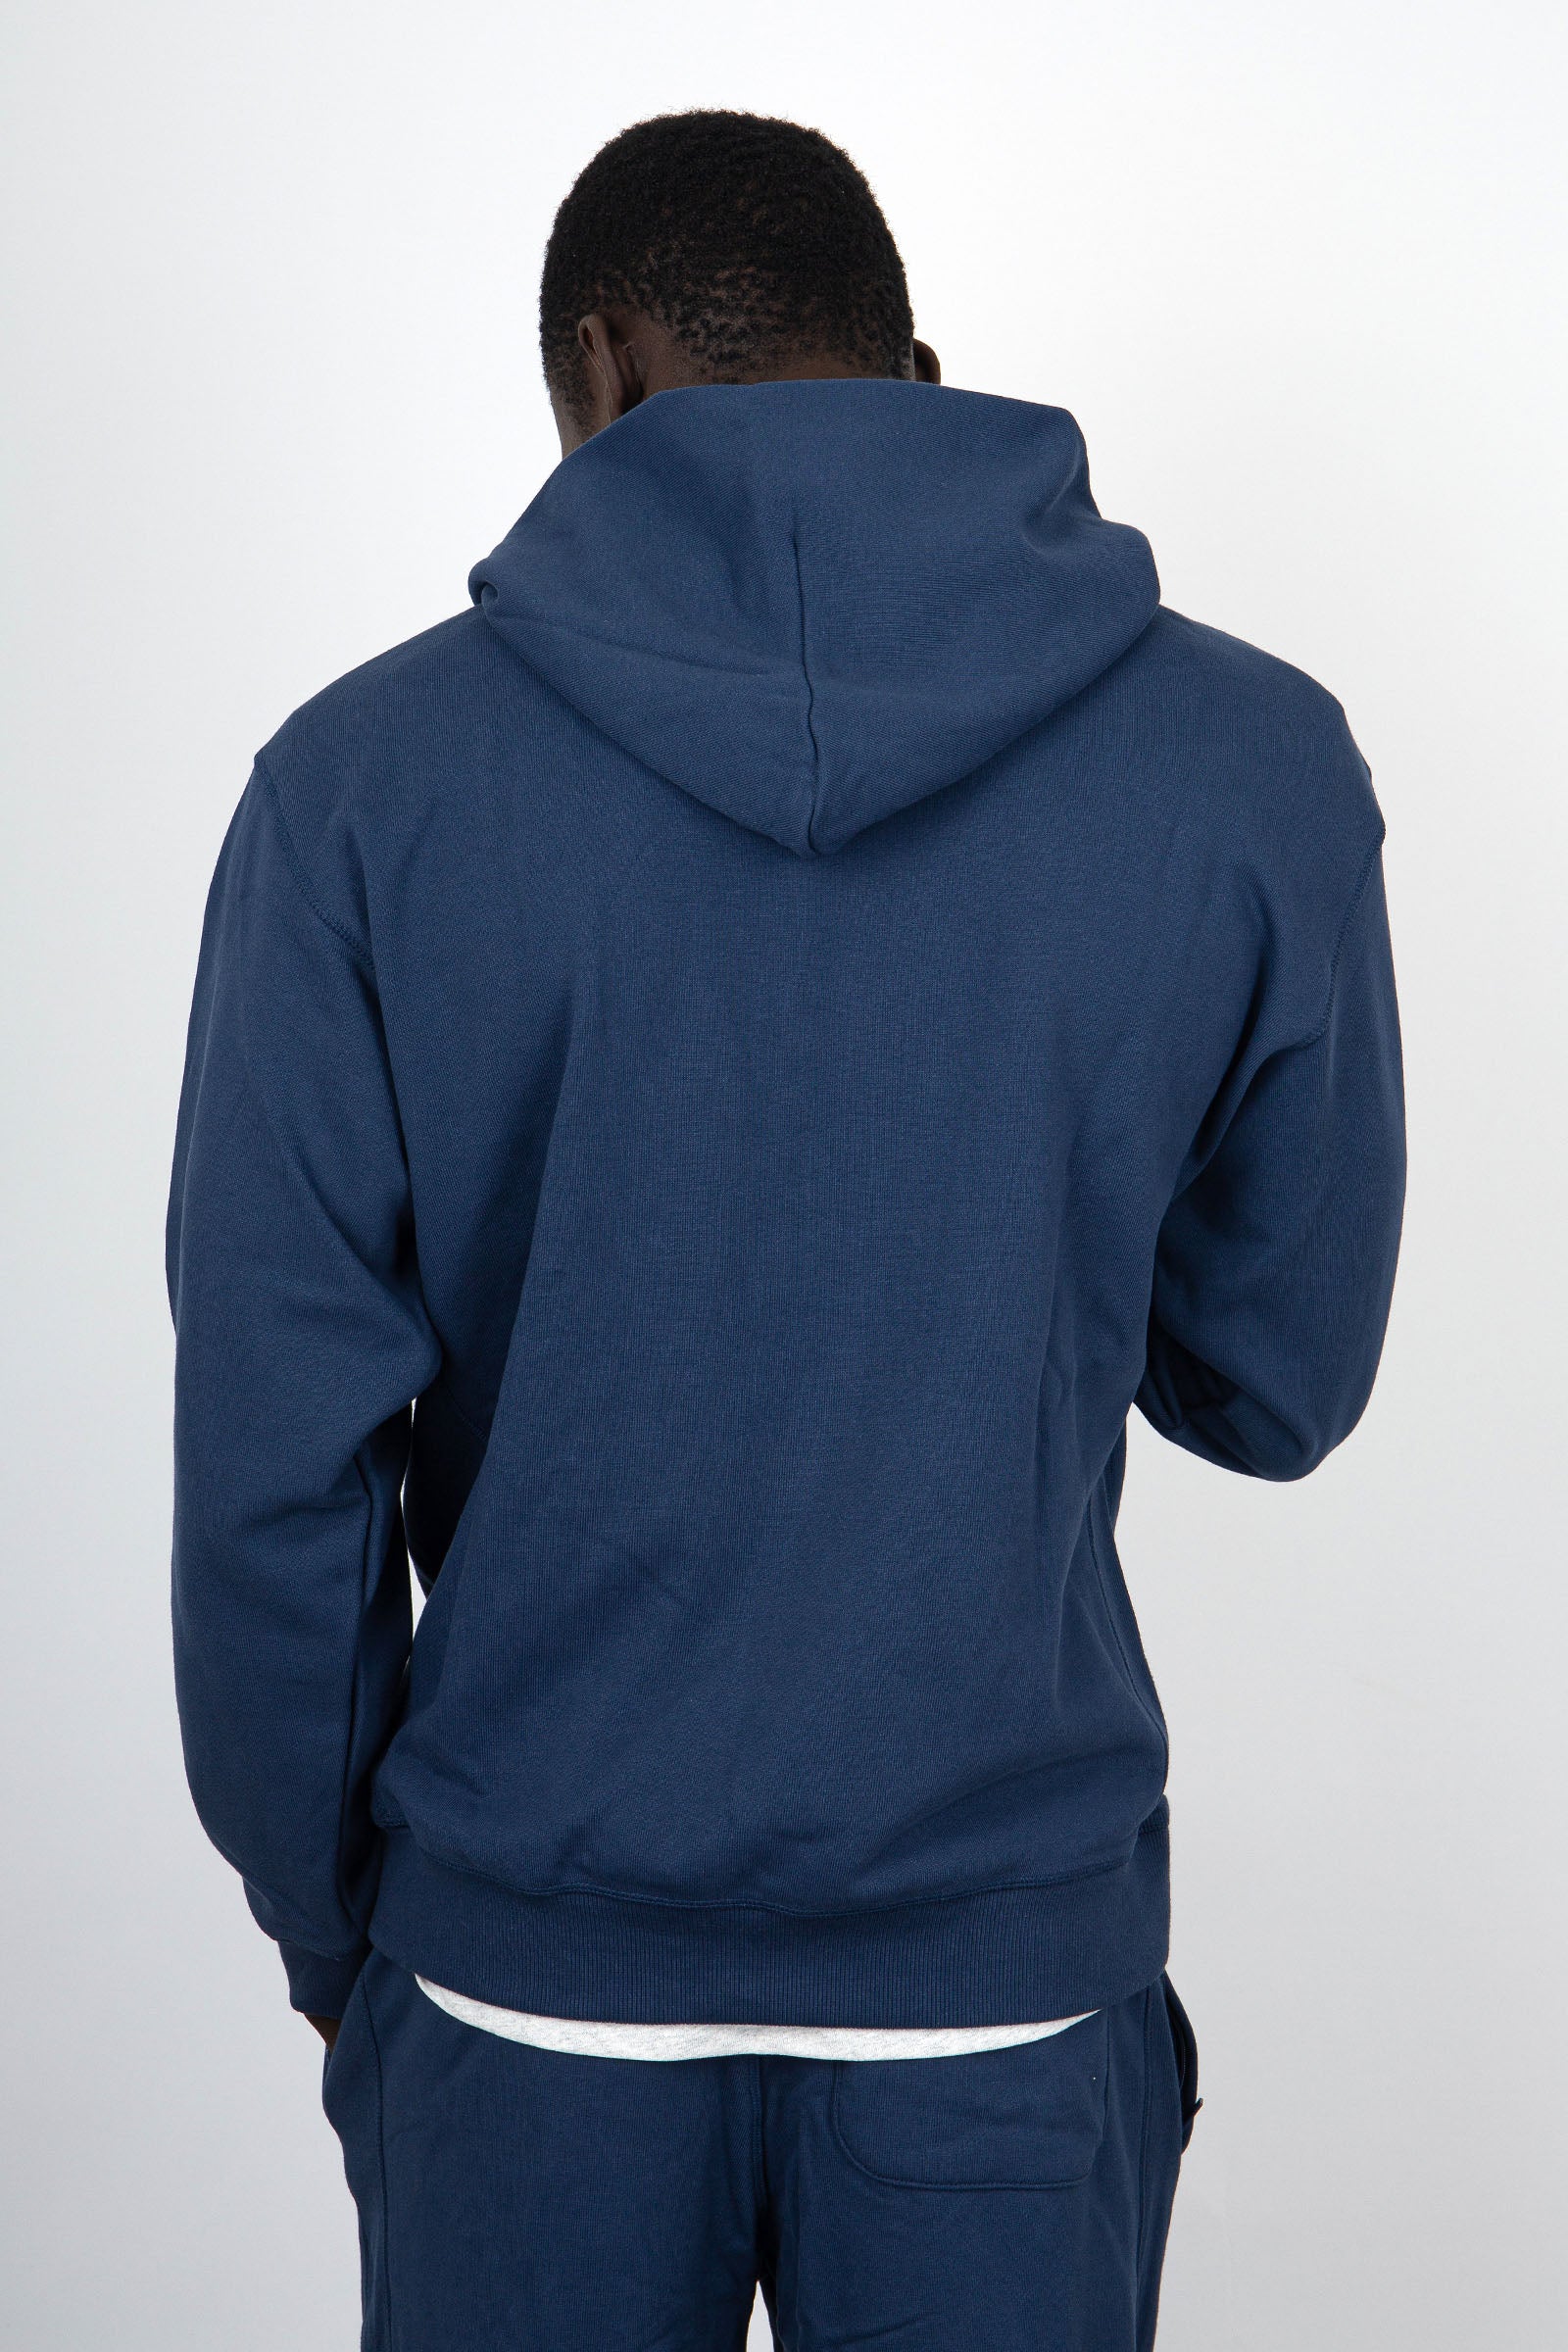 New Balance Sweatshirt Athletics French Terry Hoodie Cotton Navy Blue - 4